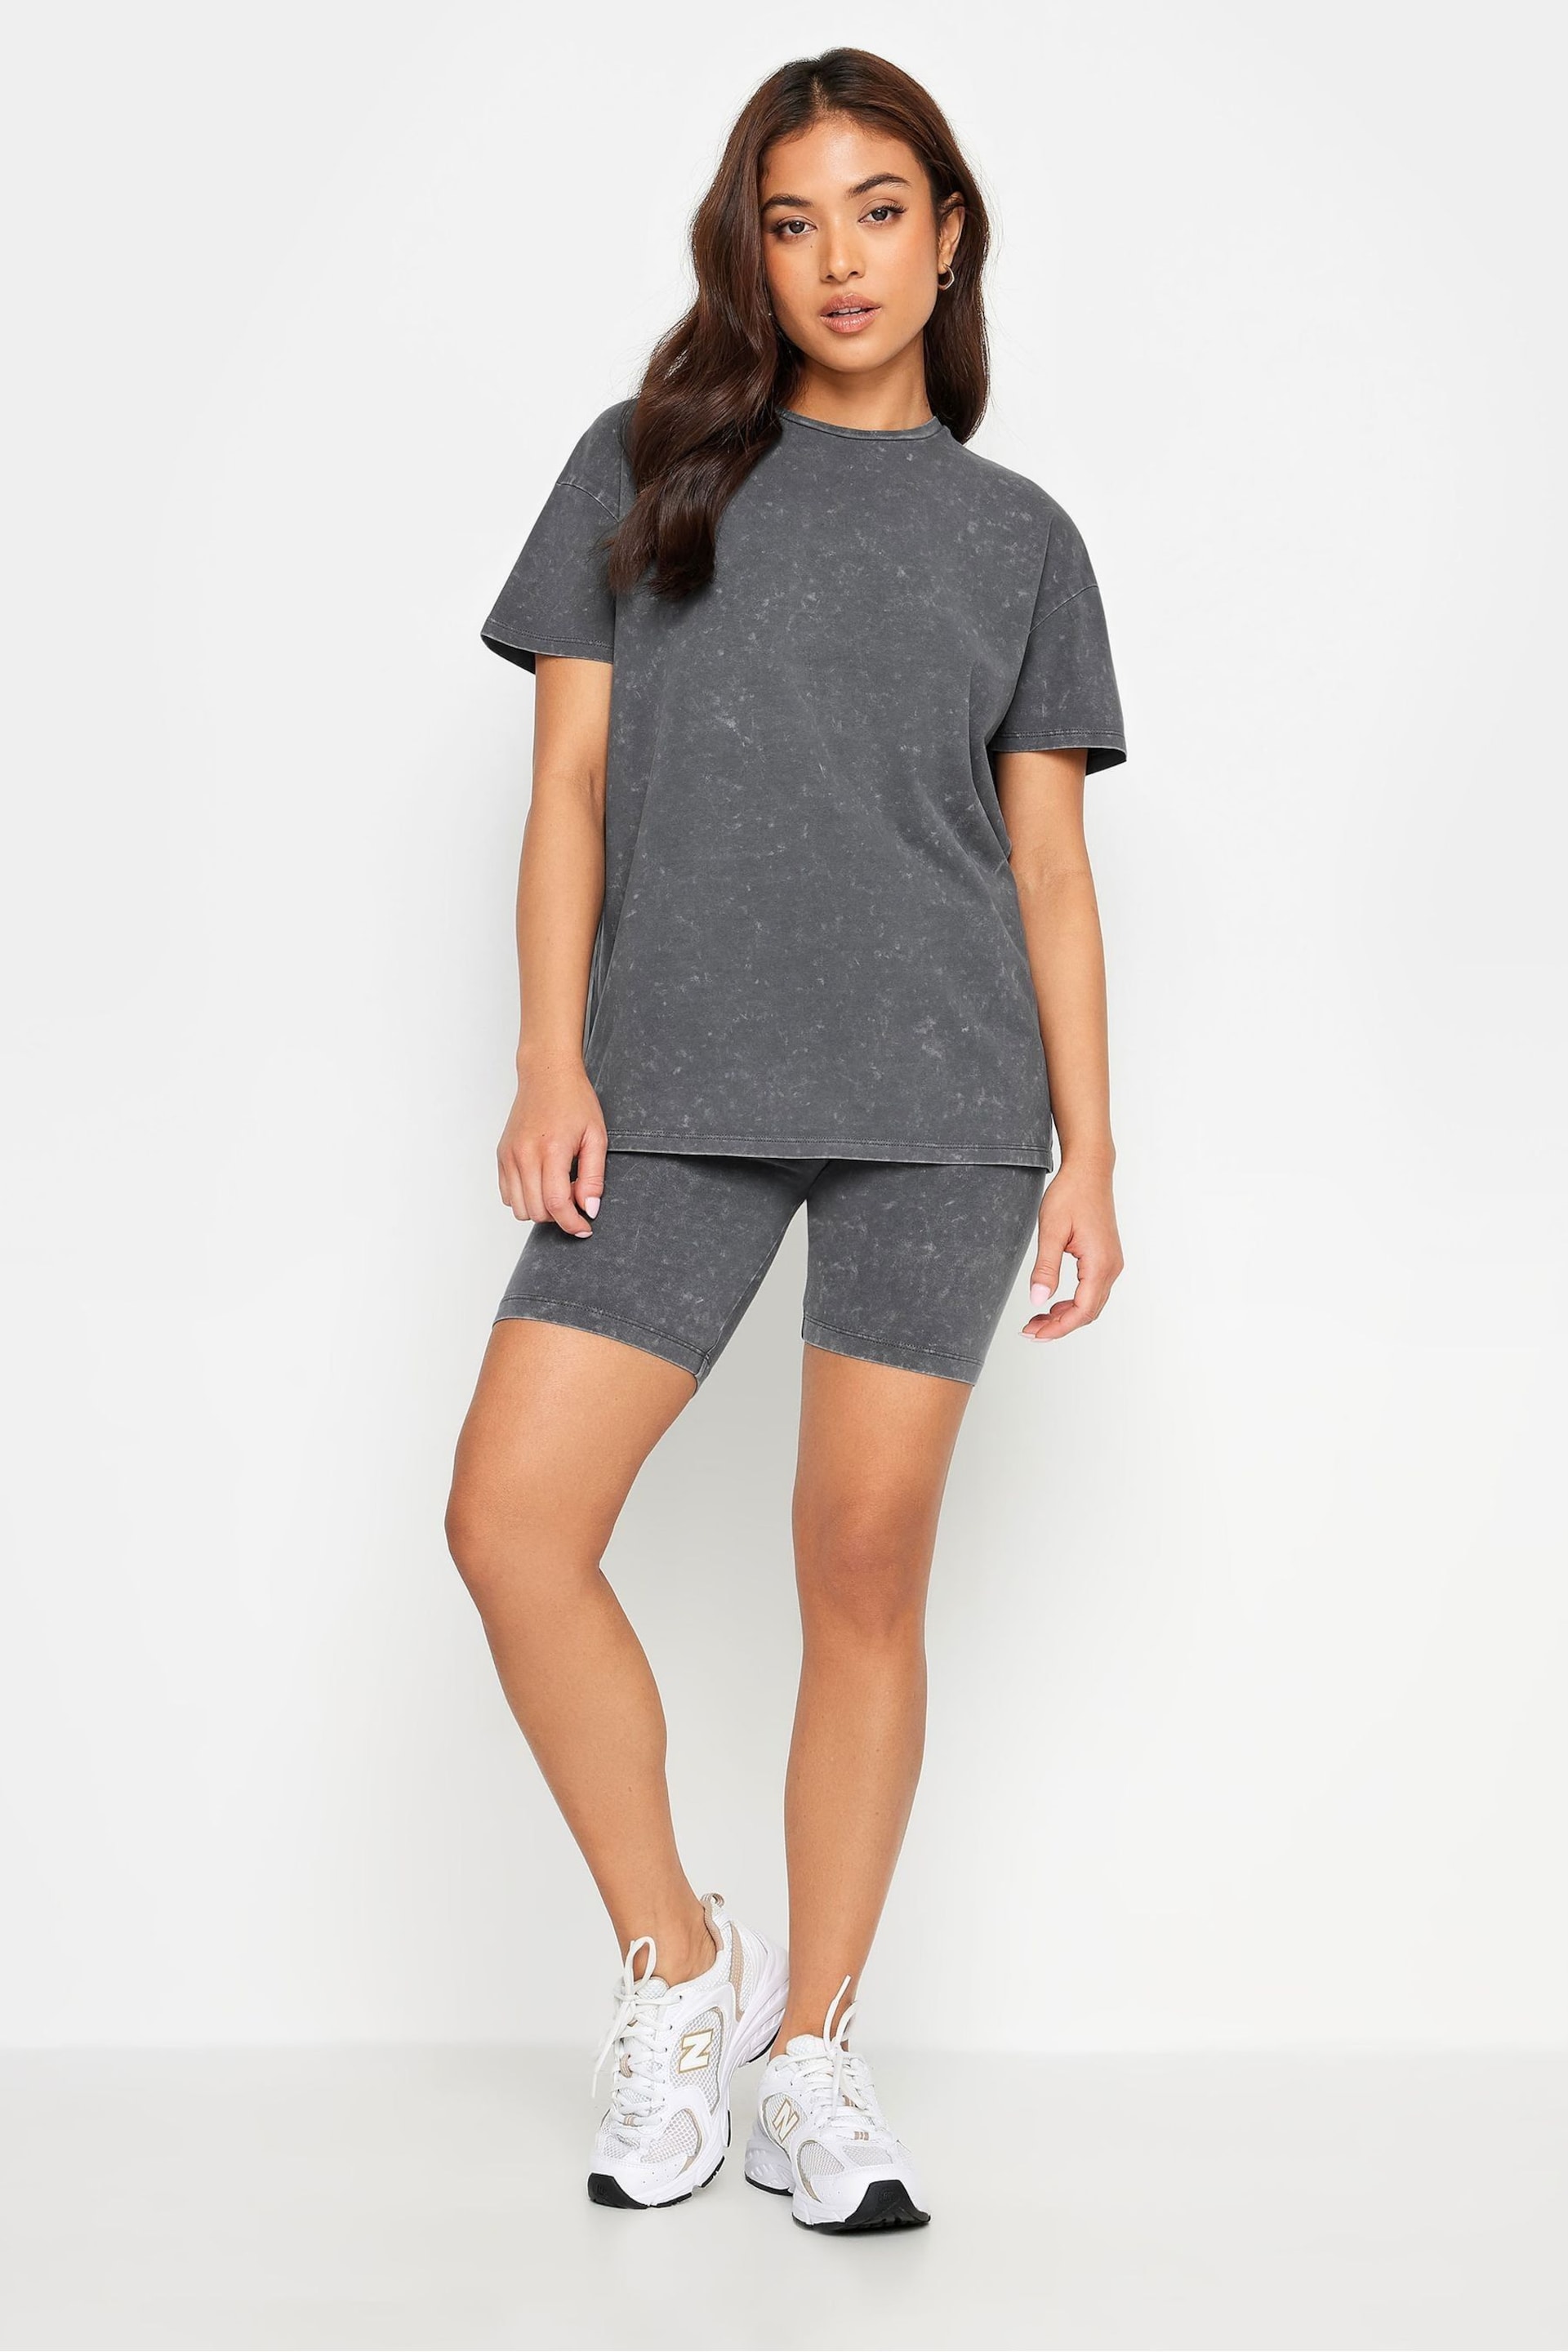 PixieGirl Petite Grey Acid Wash T-Shirt Shorts Set - Image 2 of 5